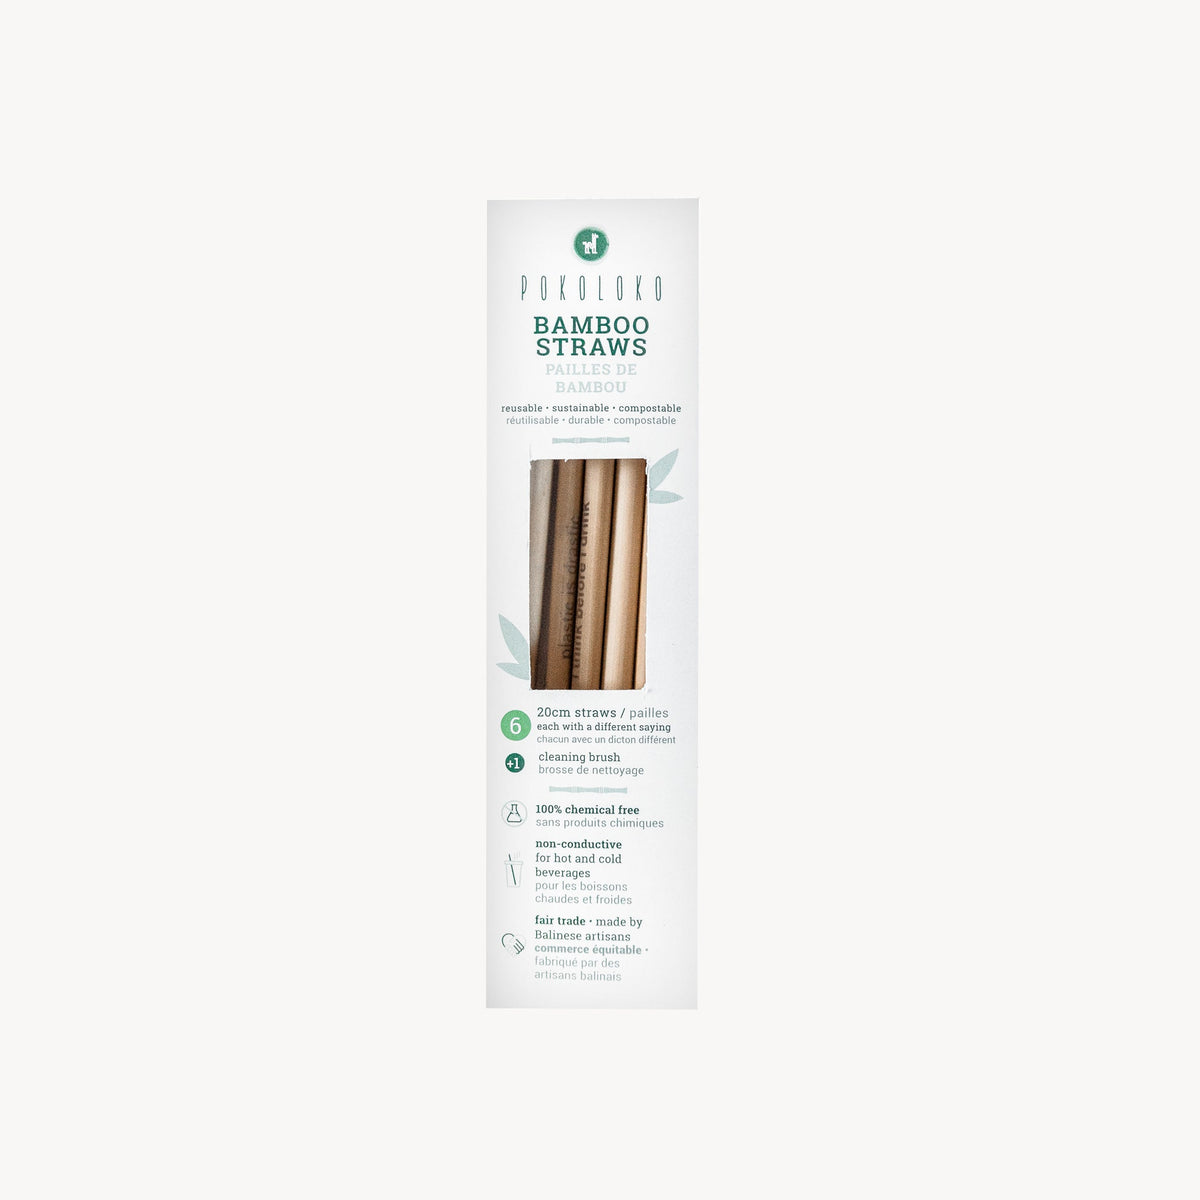 Bamboo Straws - Box of 6 with Brush by POKOLOKO